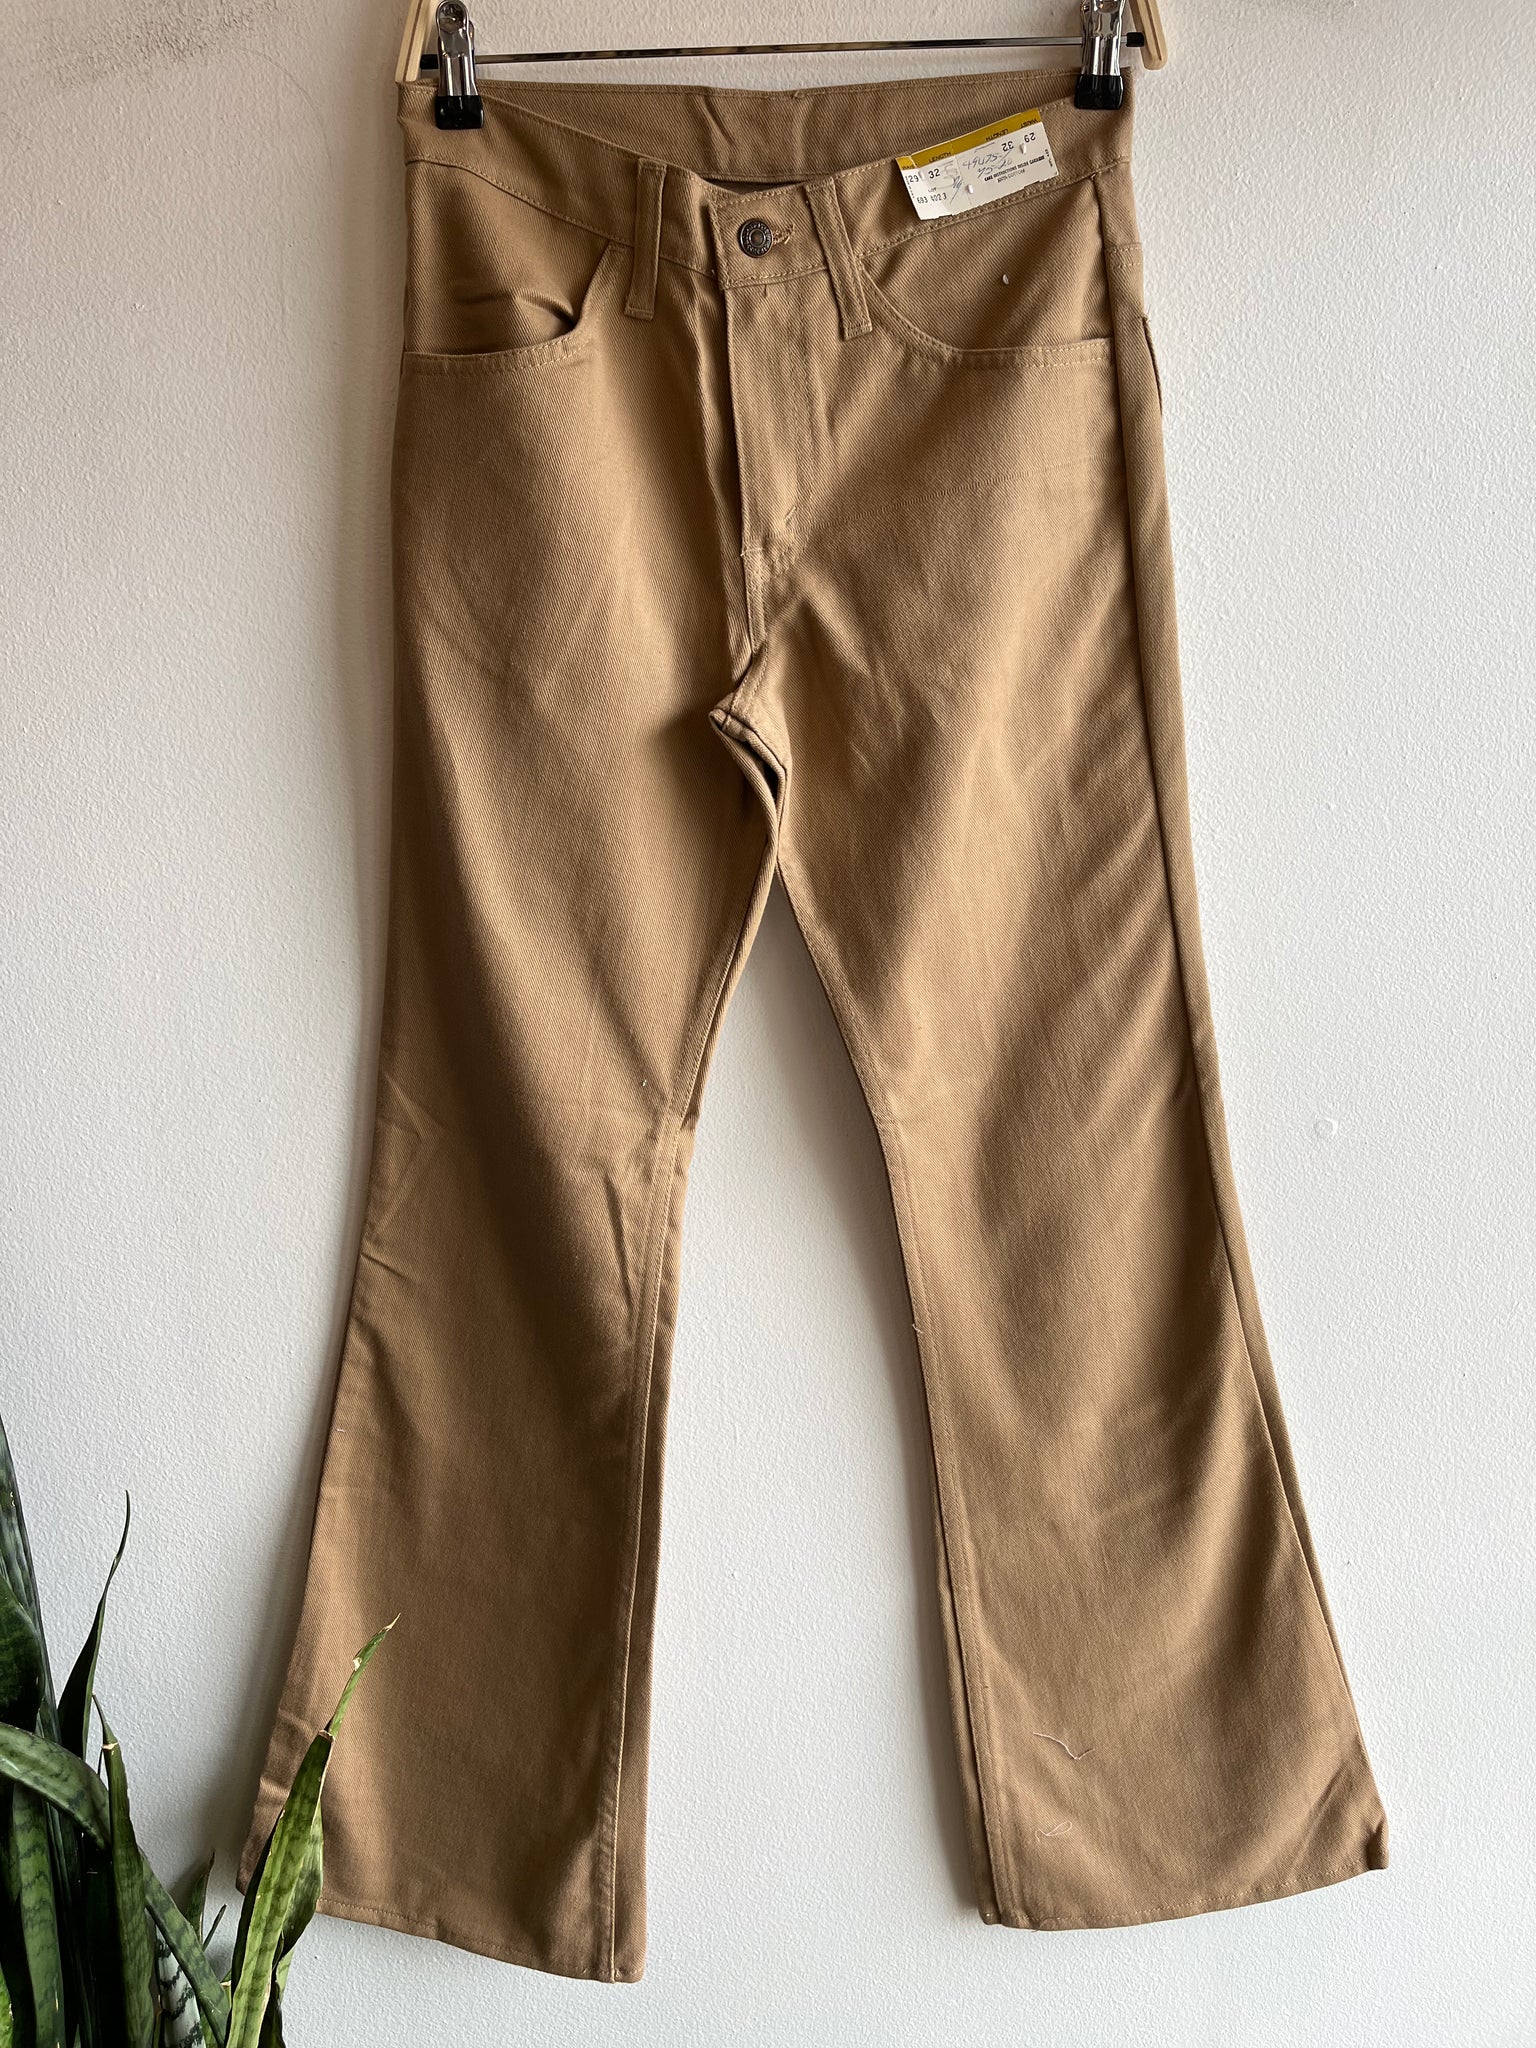 Vintage 1970's Levi’s Flare Pants - Tan